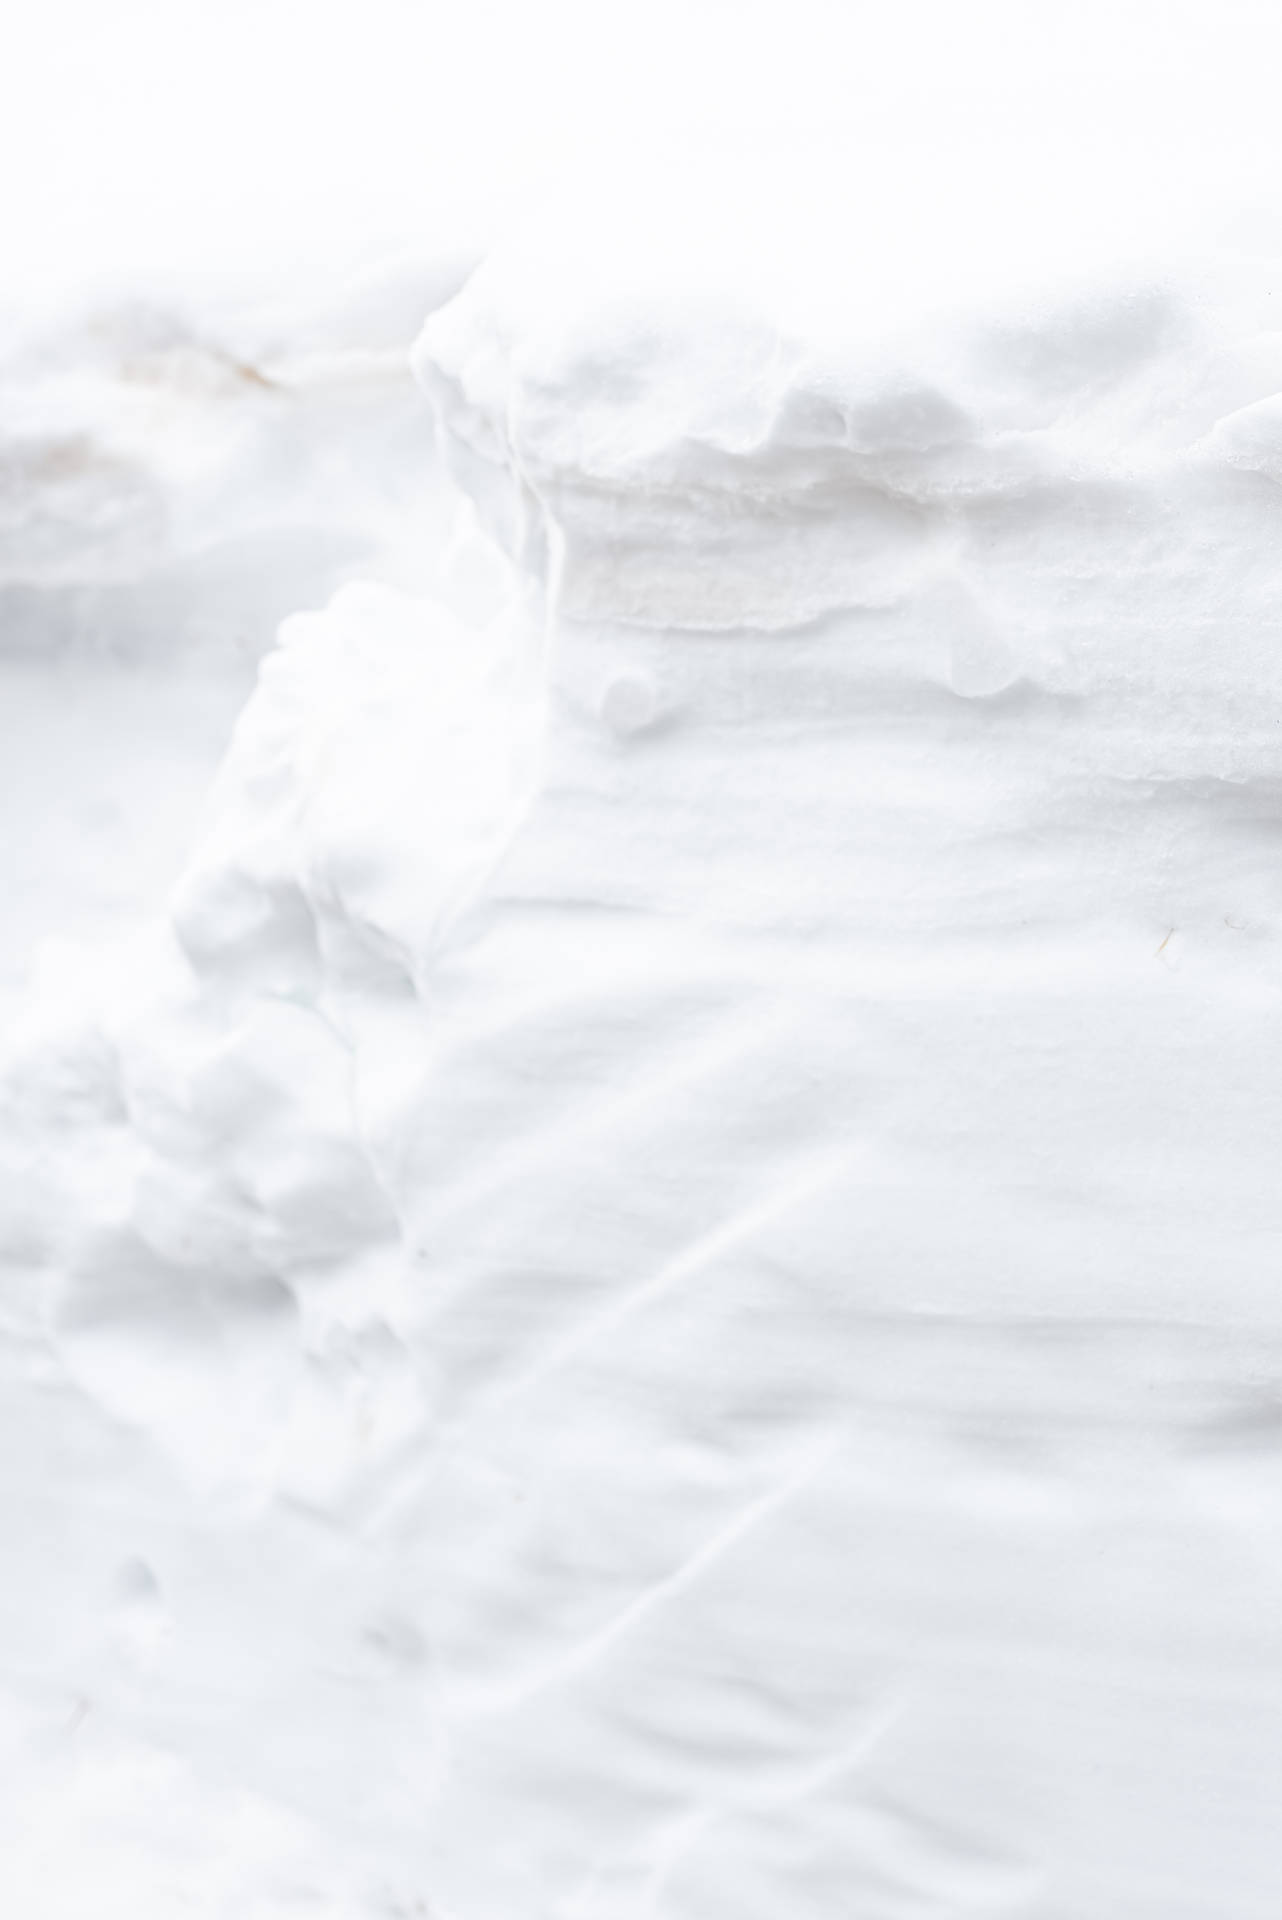 White Aesthetic Snow Background